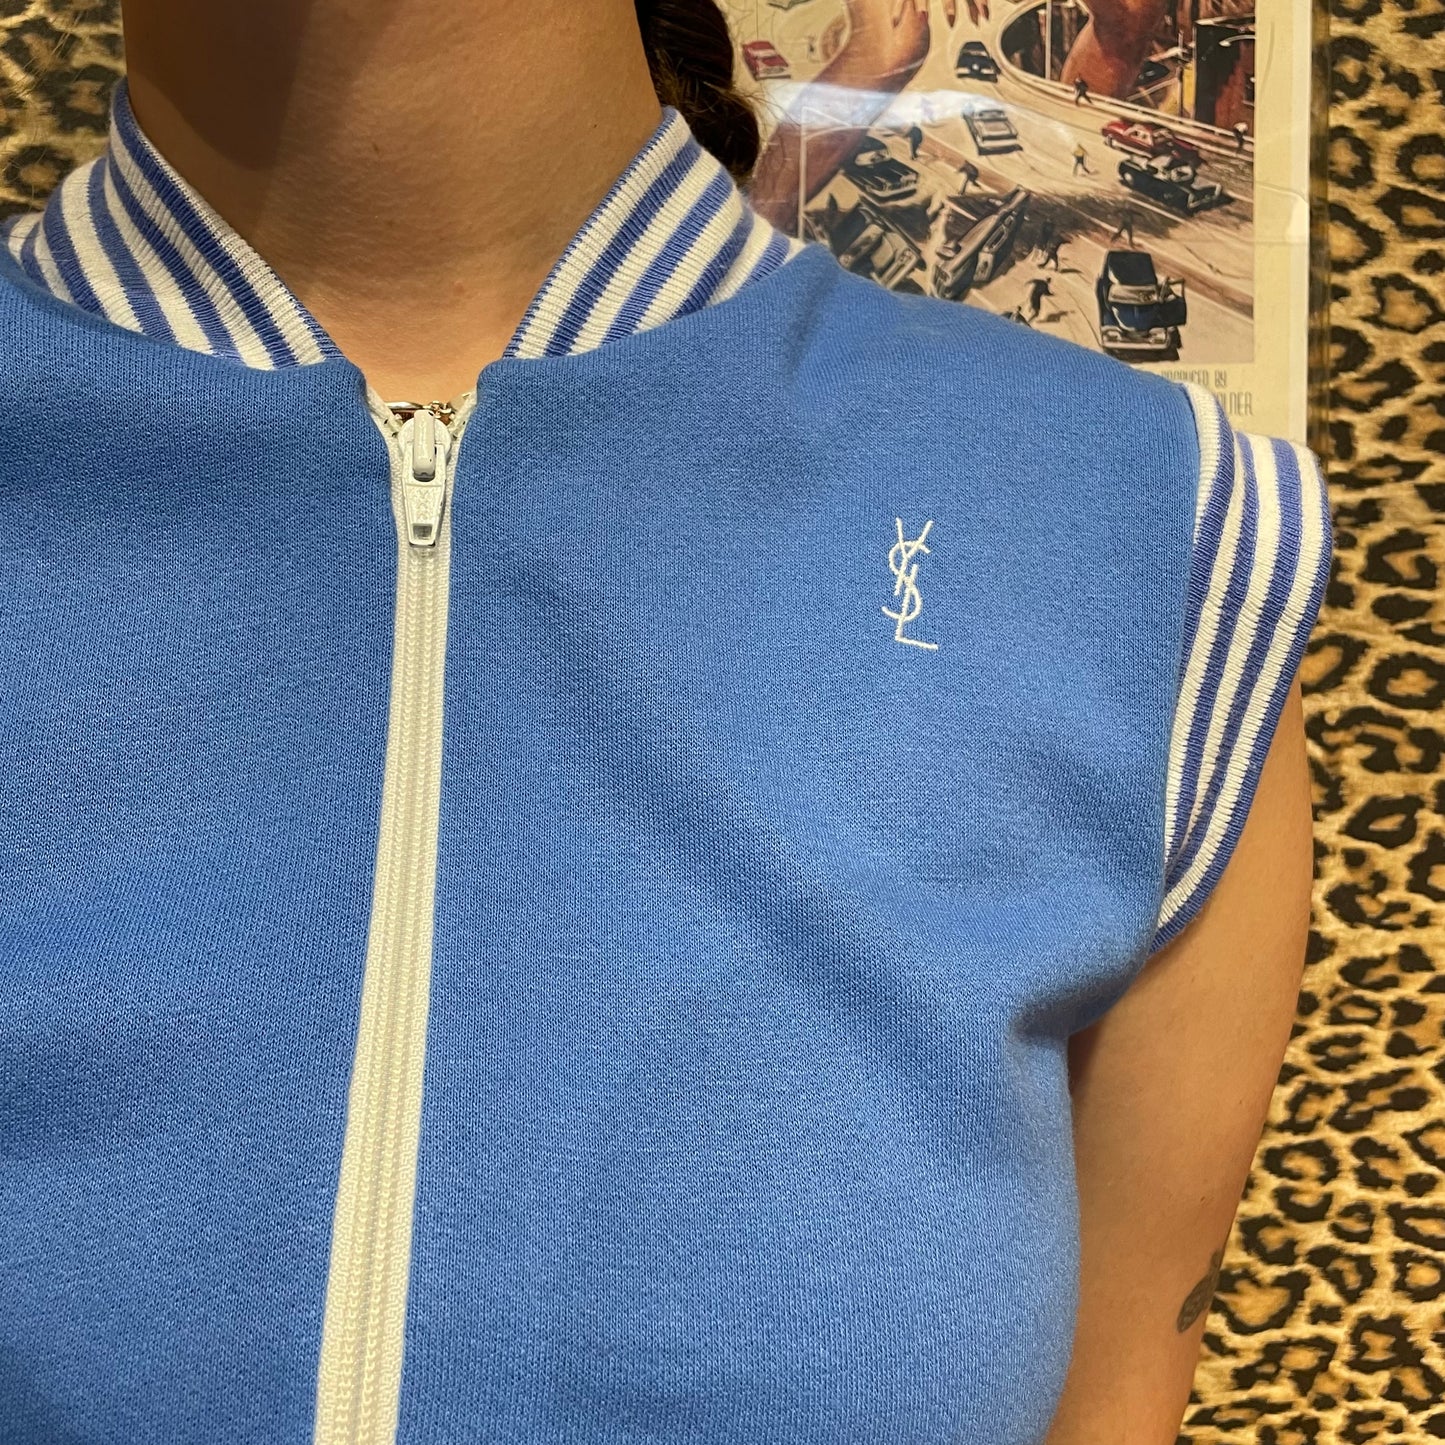 YSL Activewear 1970s Vest